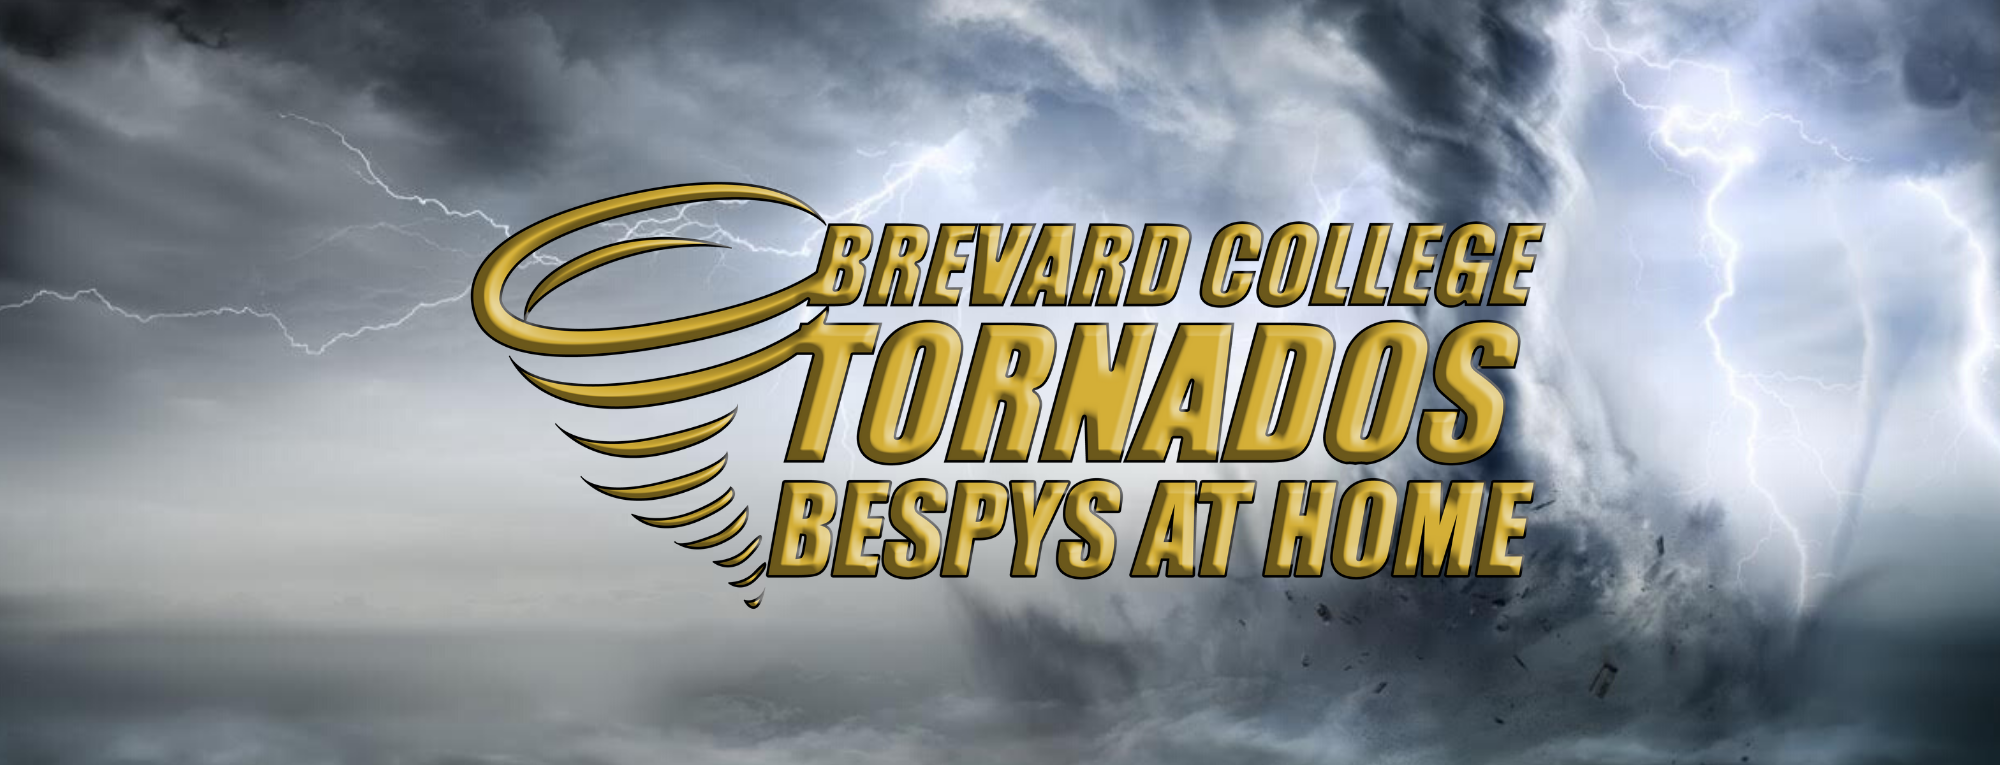 Brevard College Athletics Wraps Up 2019-20 Year, Hosts BESPYs Awards Virtually